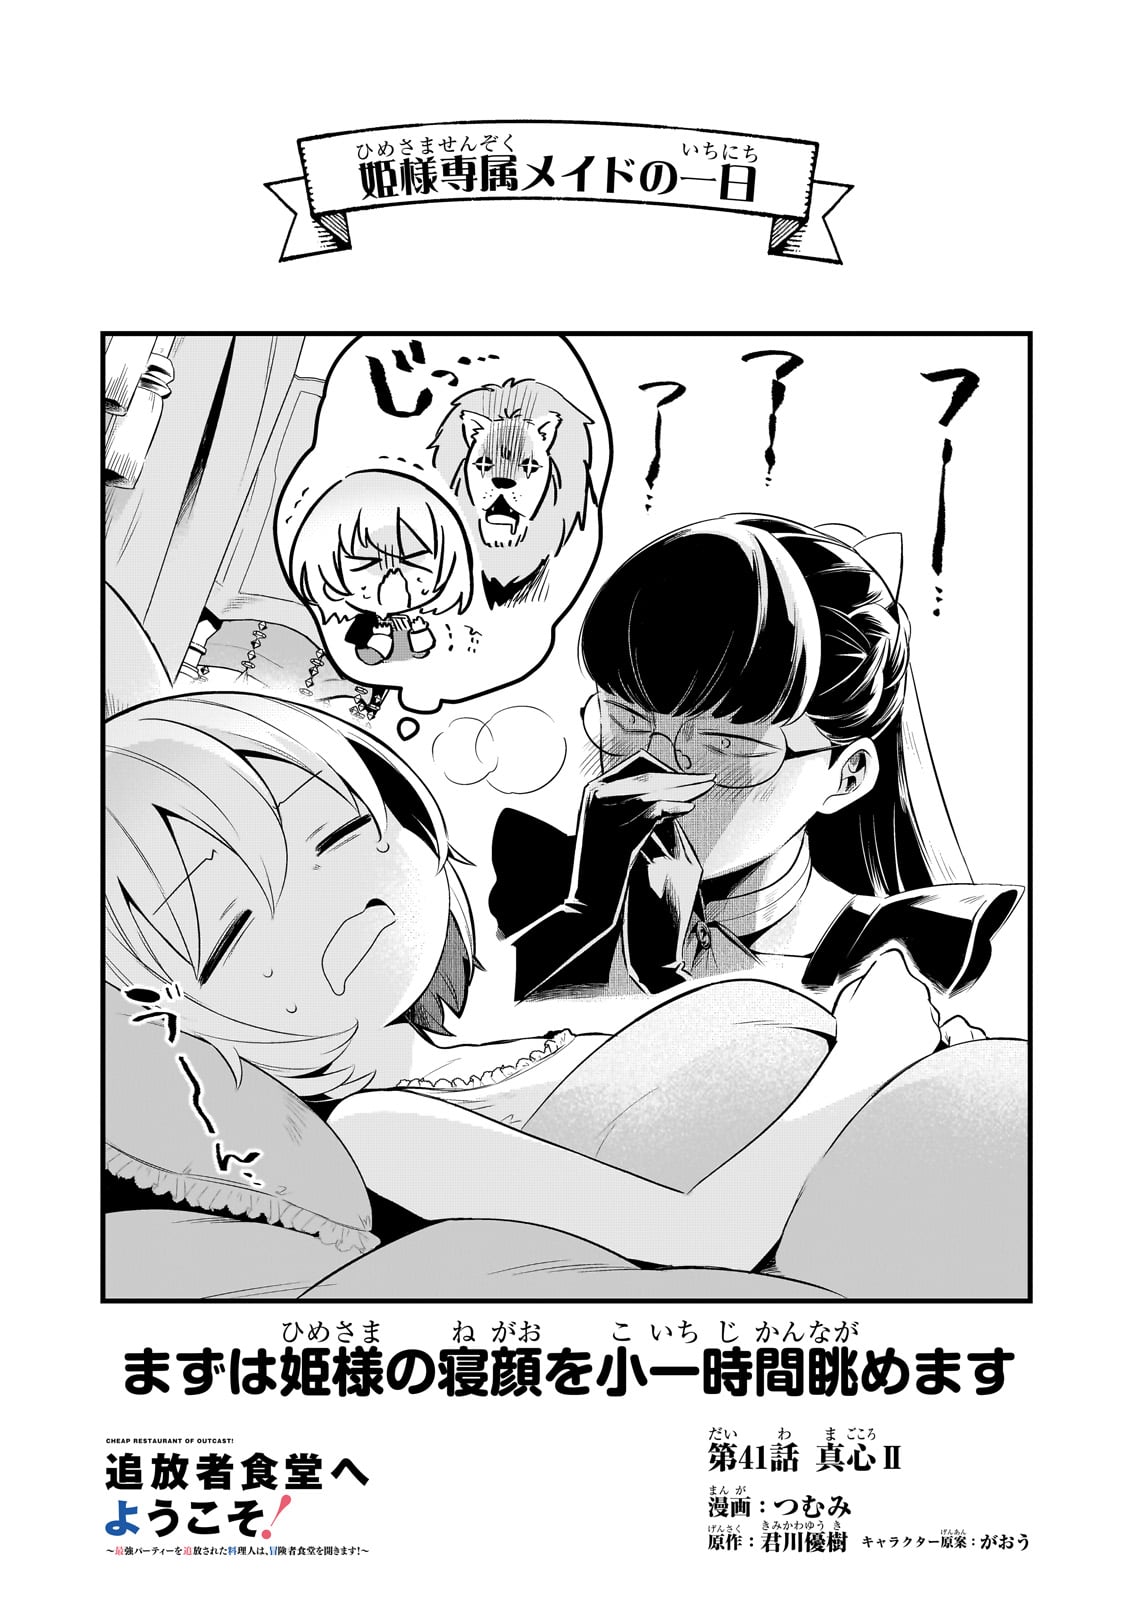 Tsuihousha Shokudou e Youkoso! - Chapter 41 - Page 1